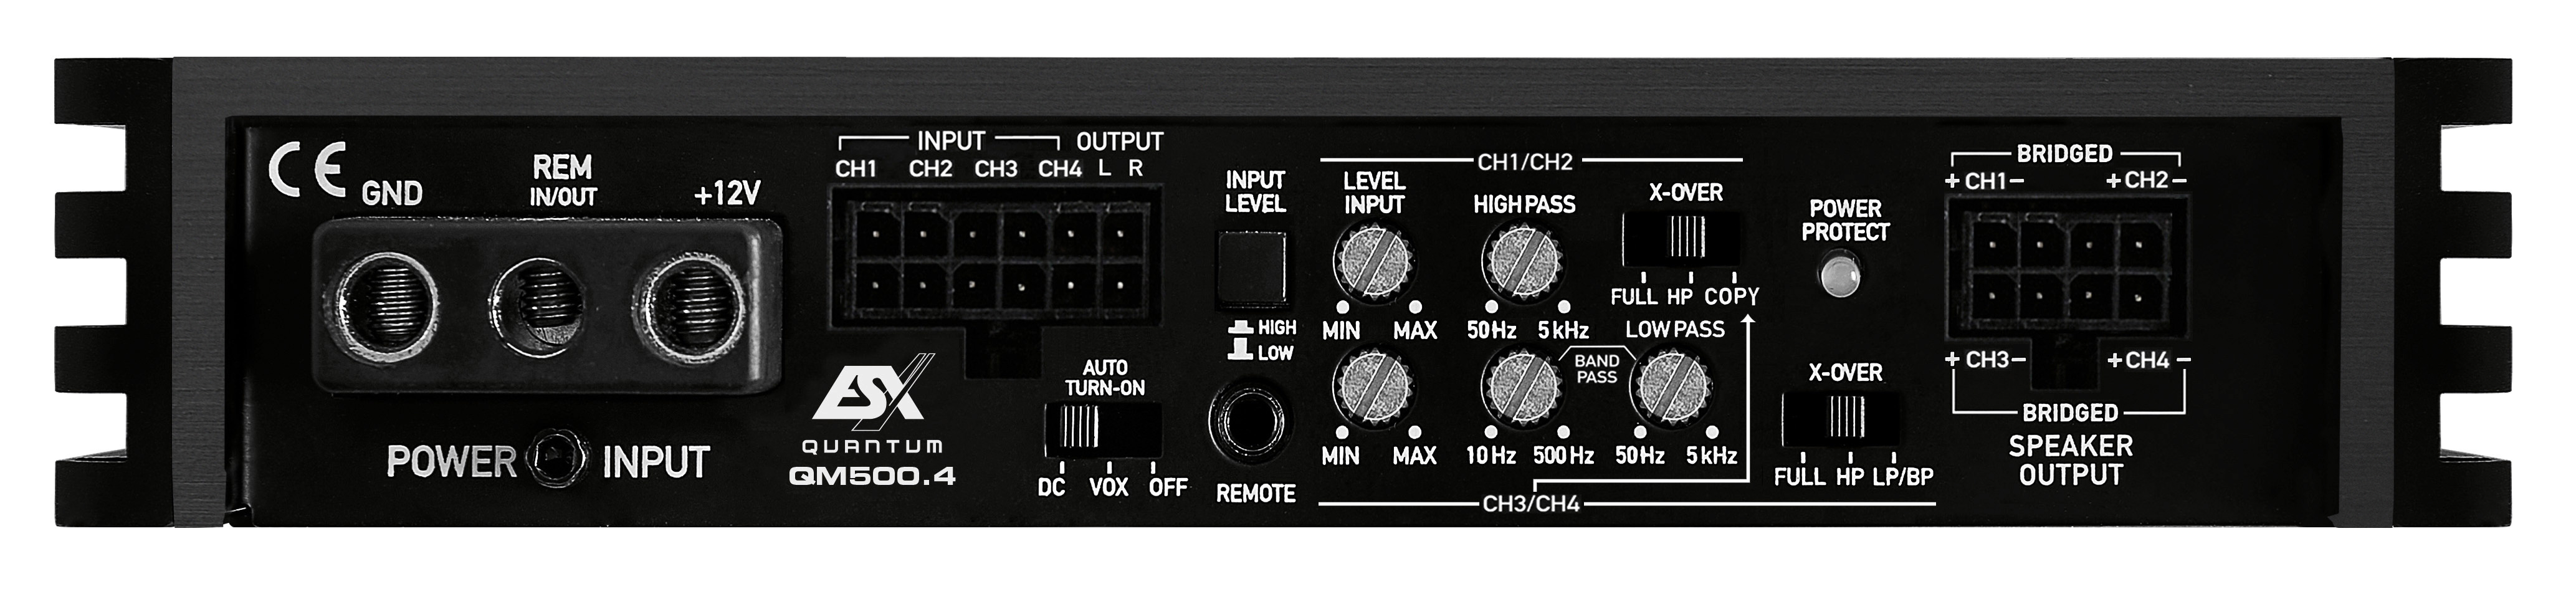 QM500.4_controlpanel